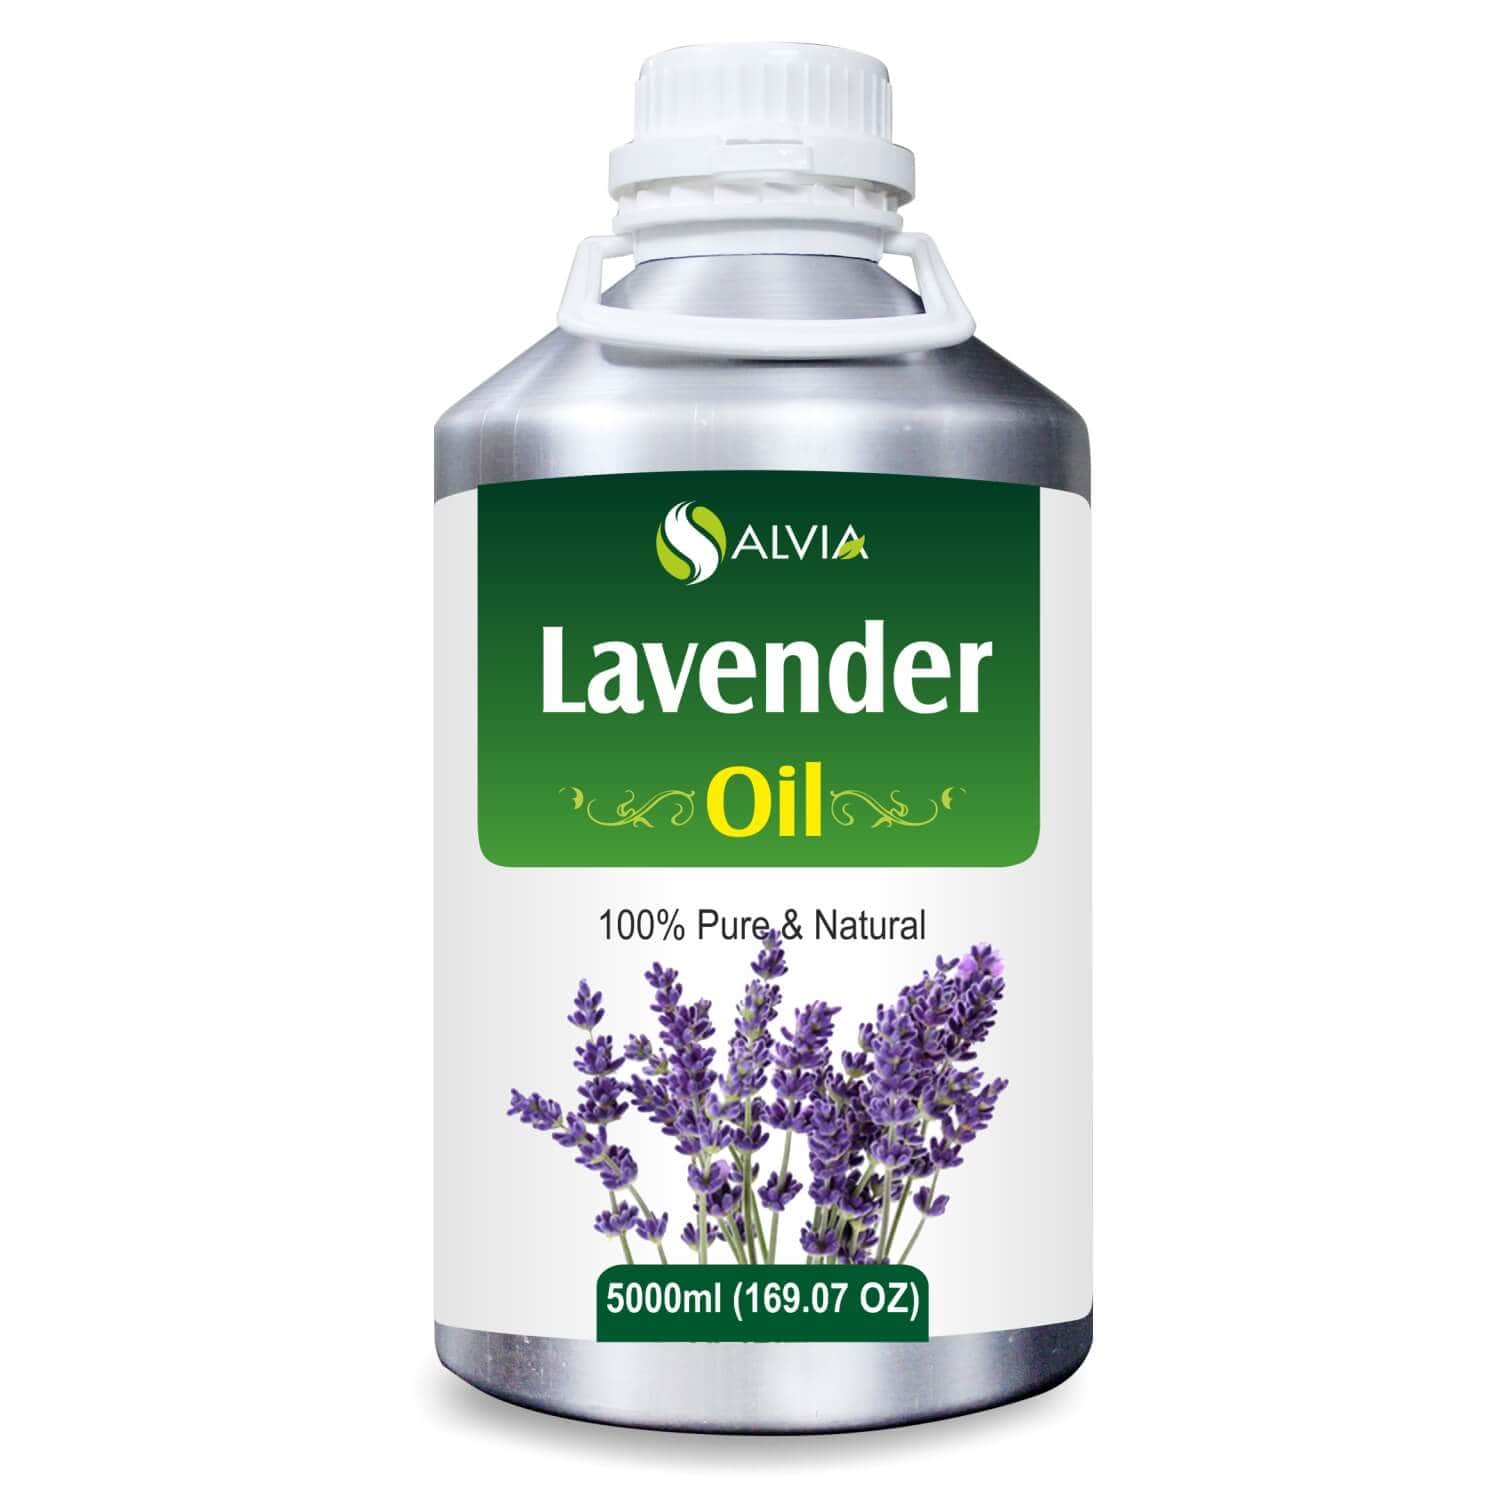 Lavender oil uses  benefits  Bonus DIY hair growth recipes hairloss   Kokosöl haare Lavendelöl Öl für haarwachstum